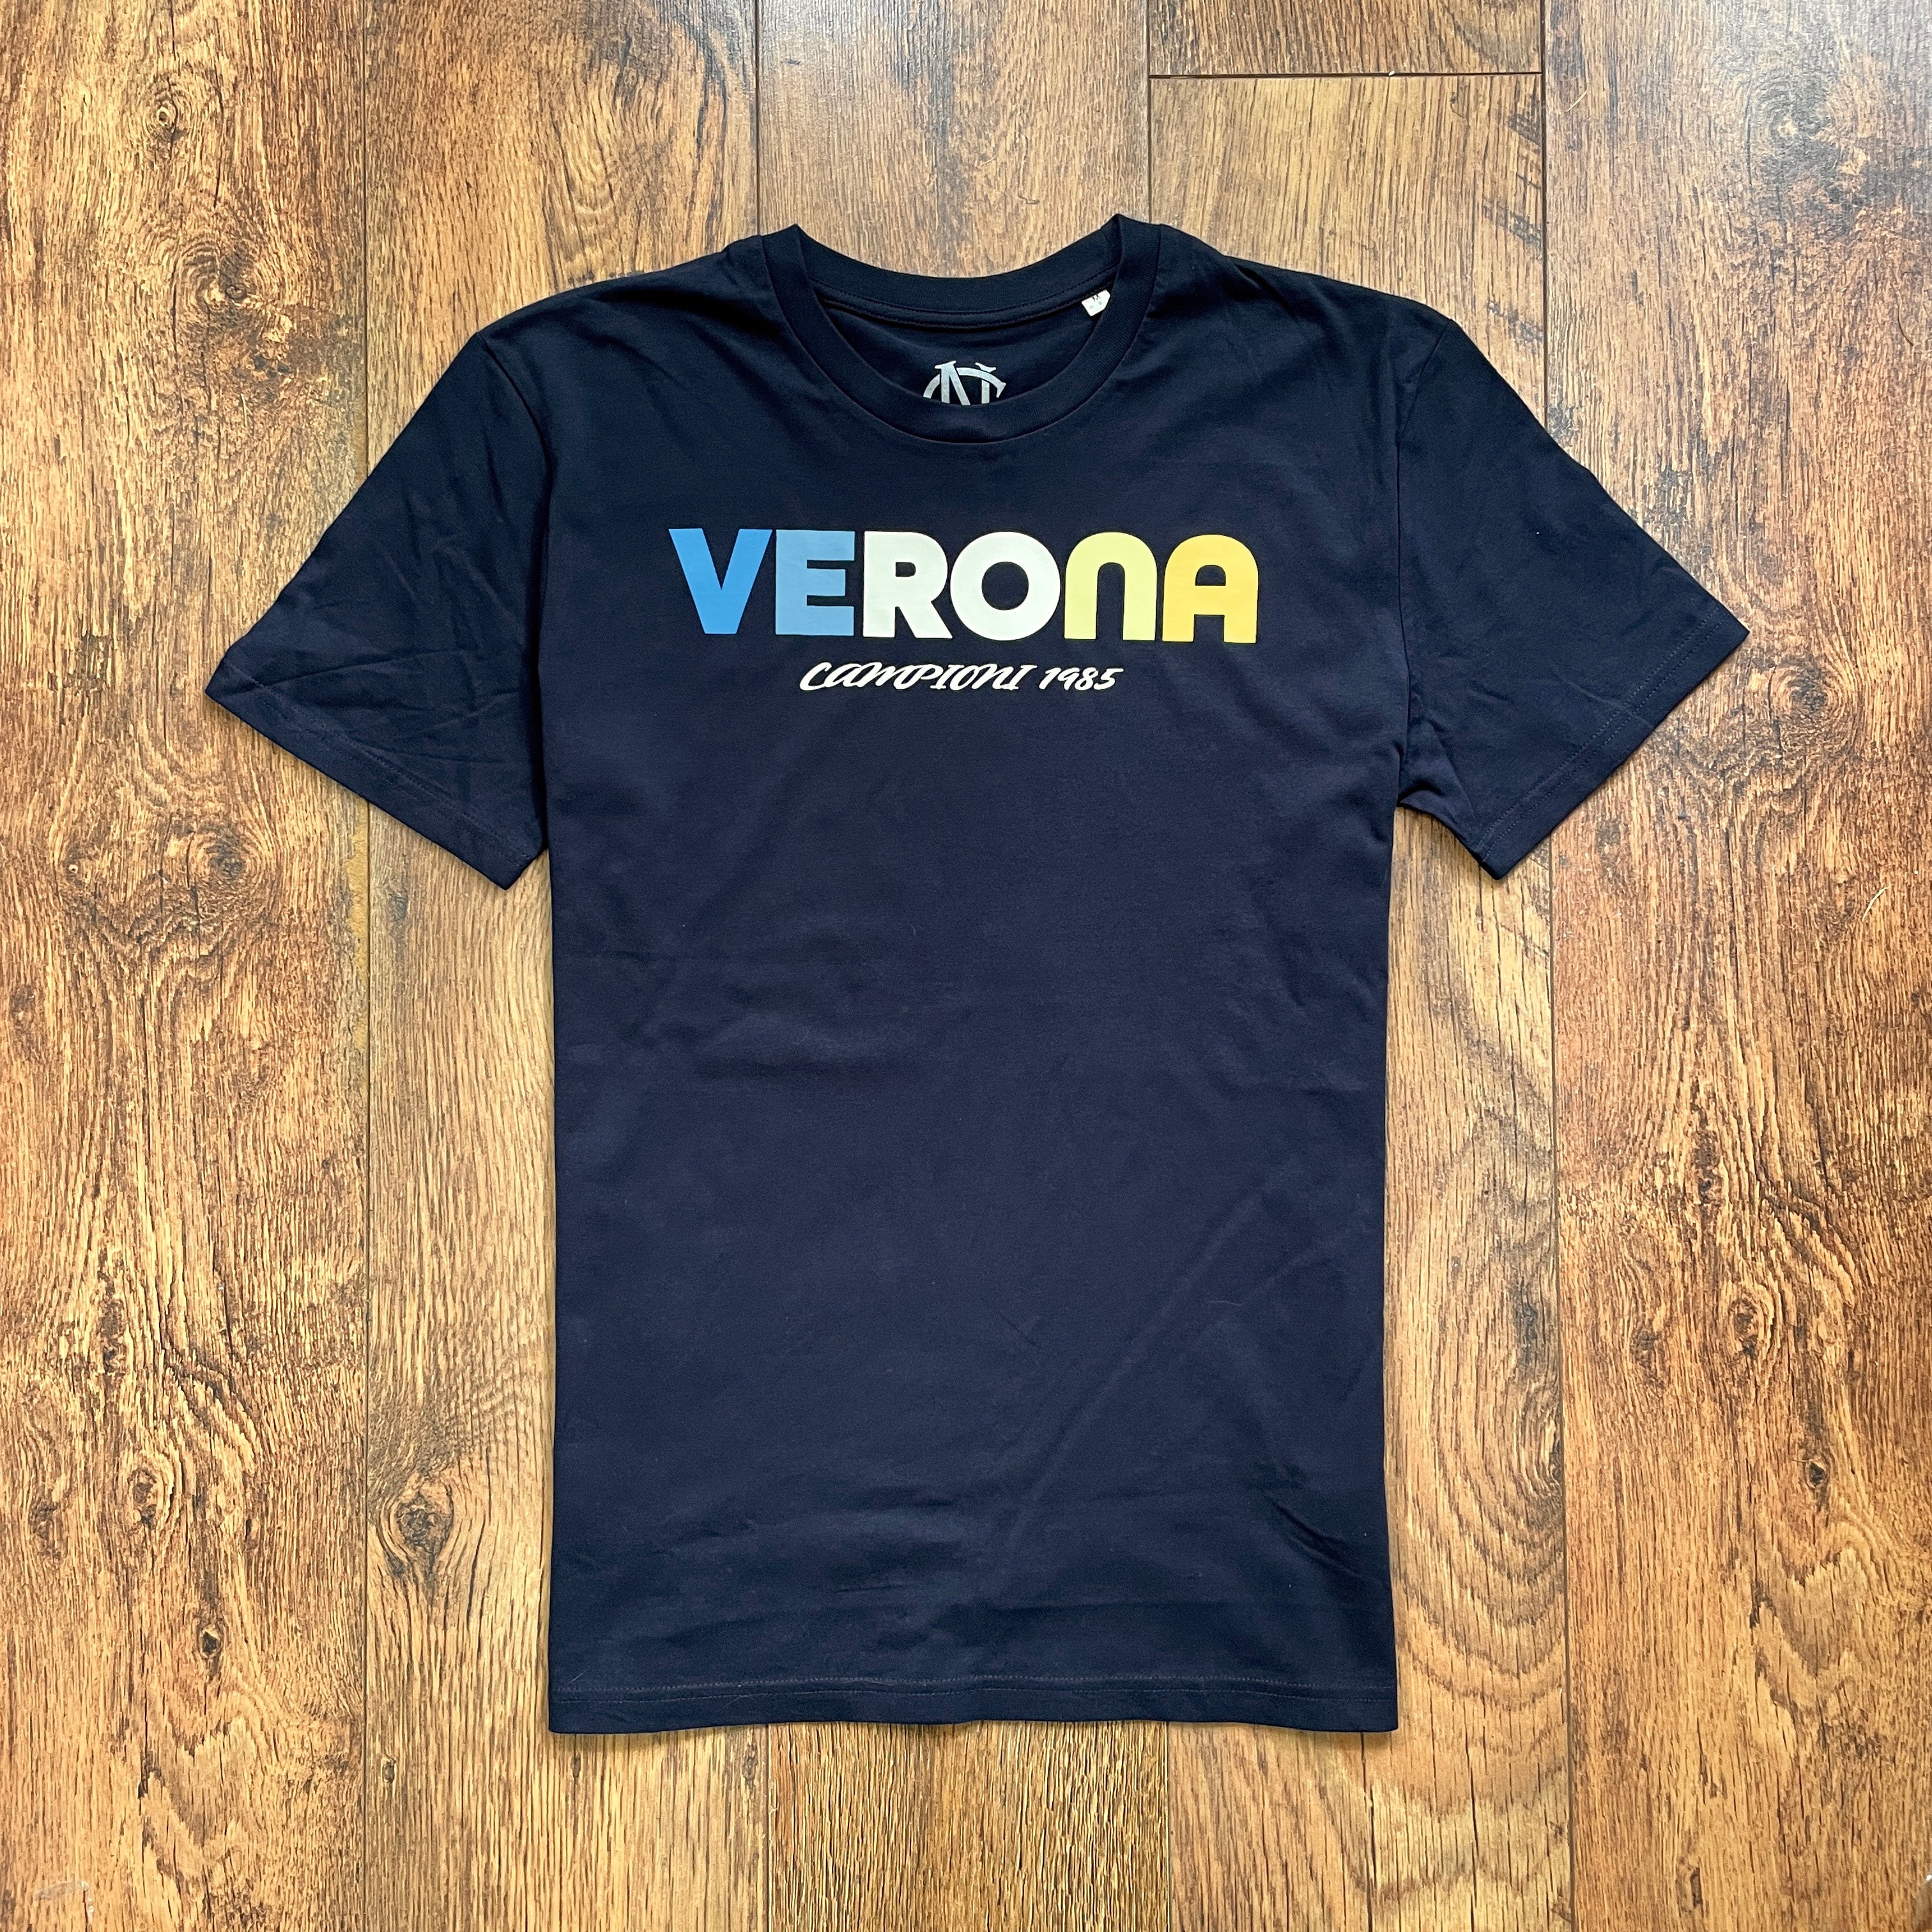 Verona 1985 shirt t-shirt